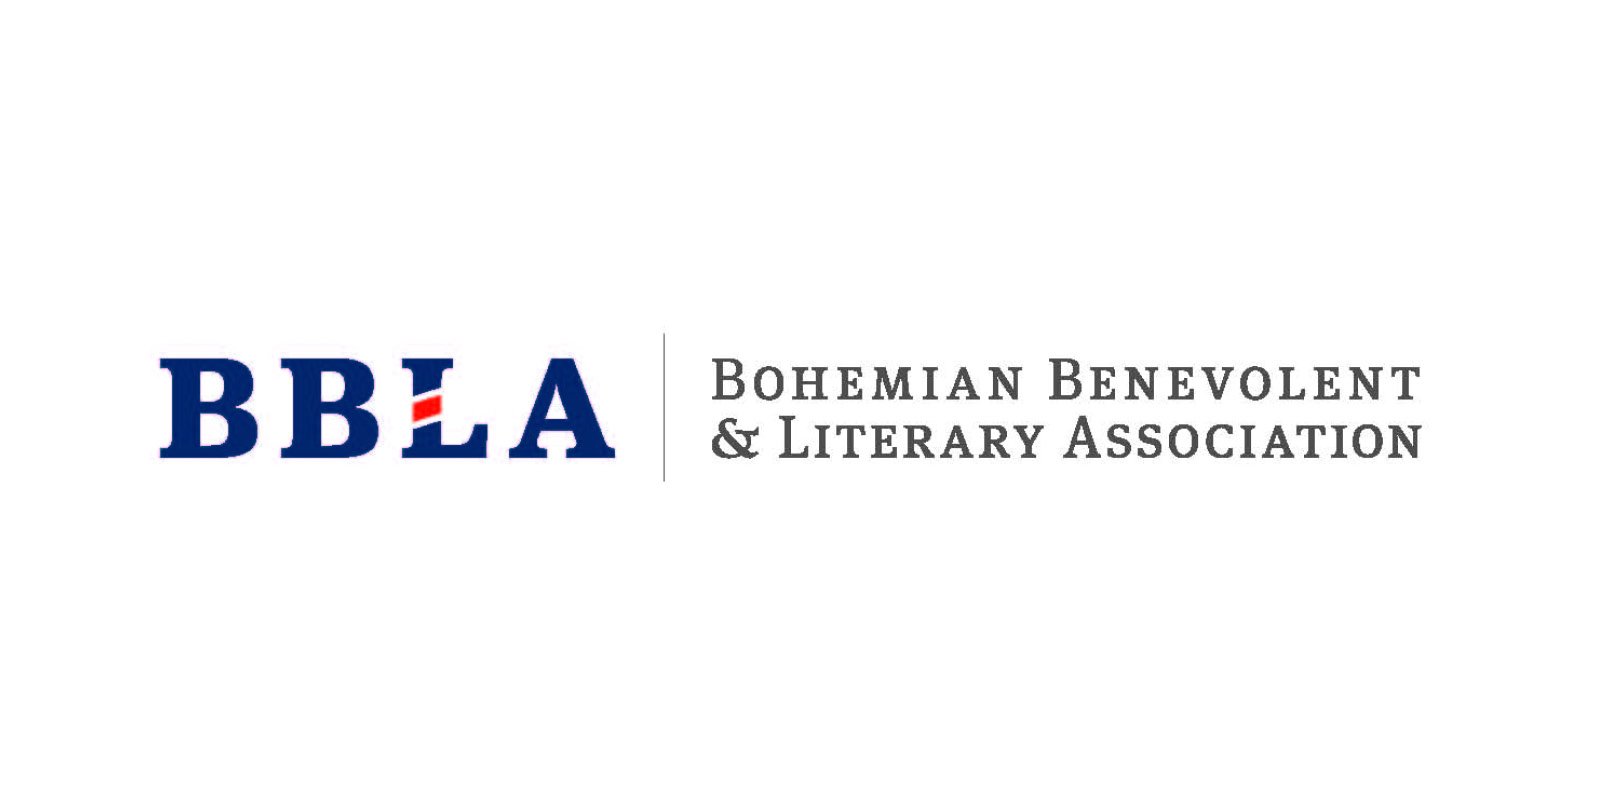 Bohemian Benevolent and Literary Association